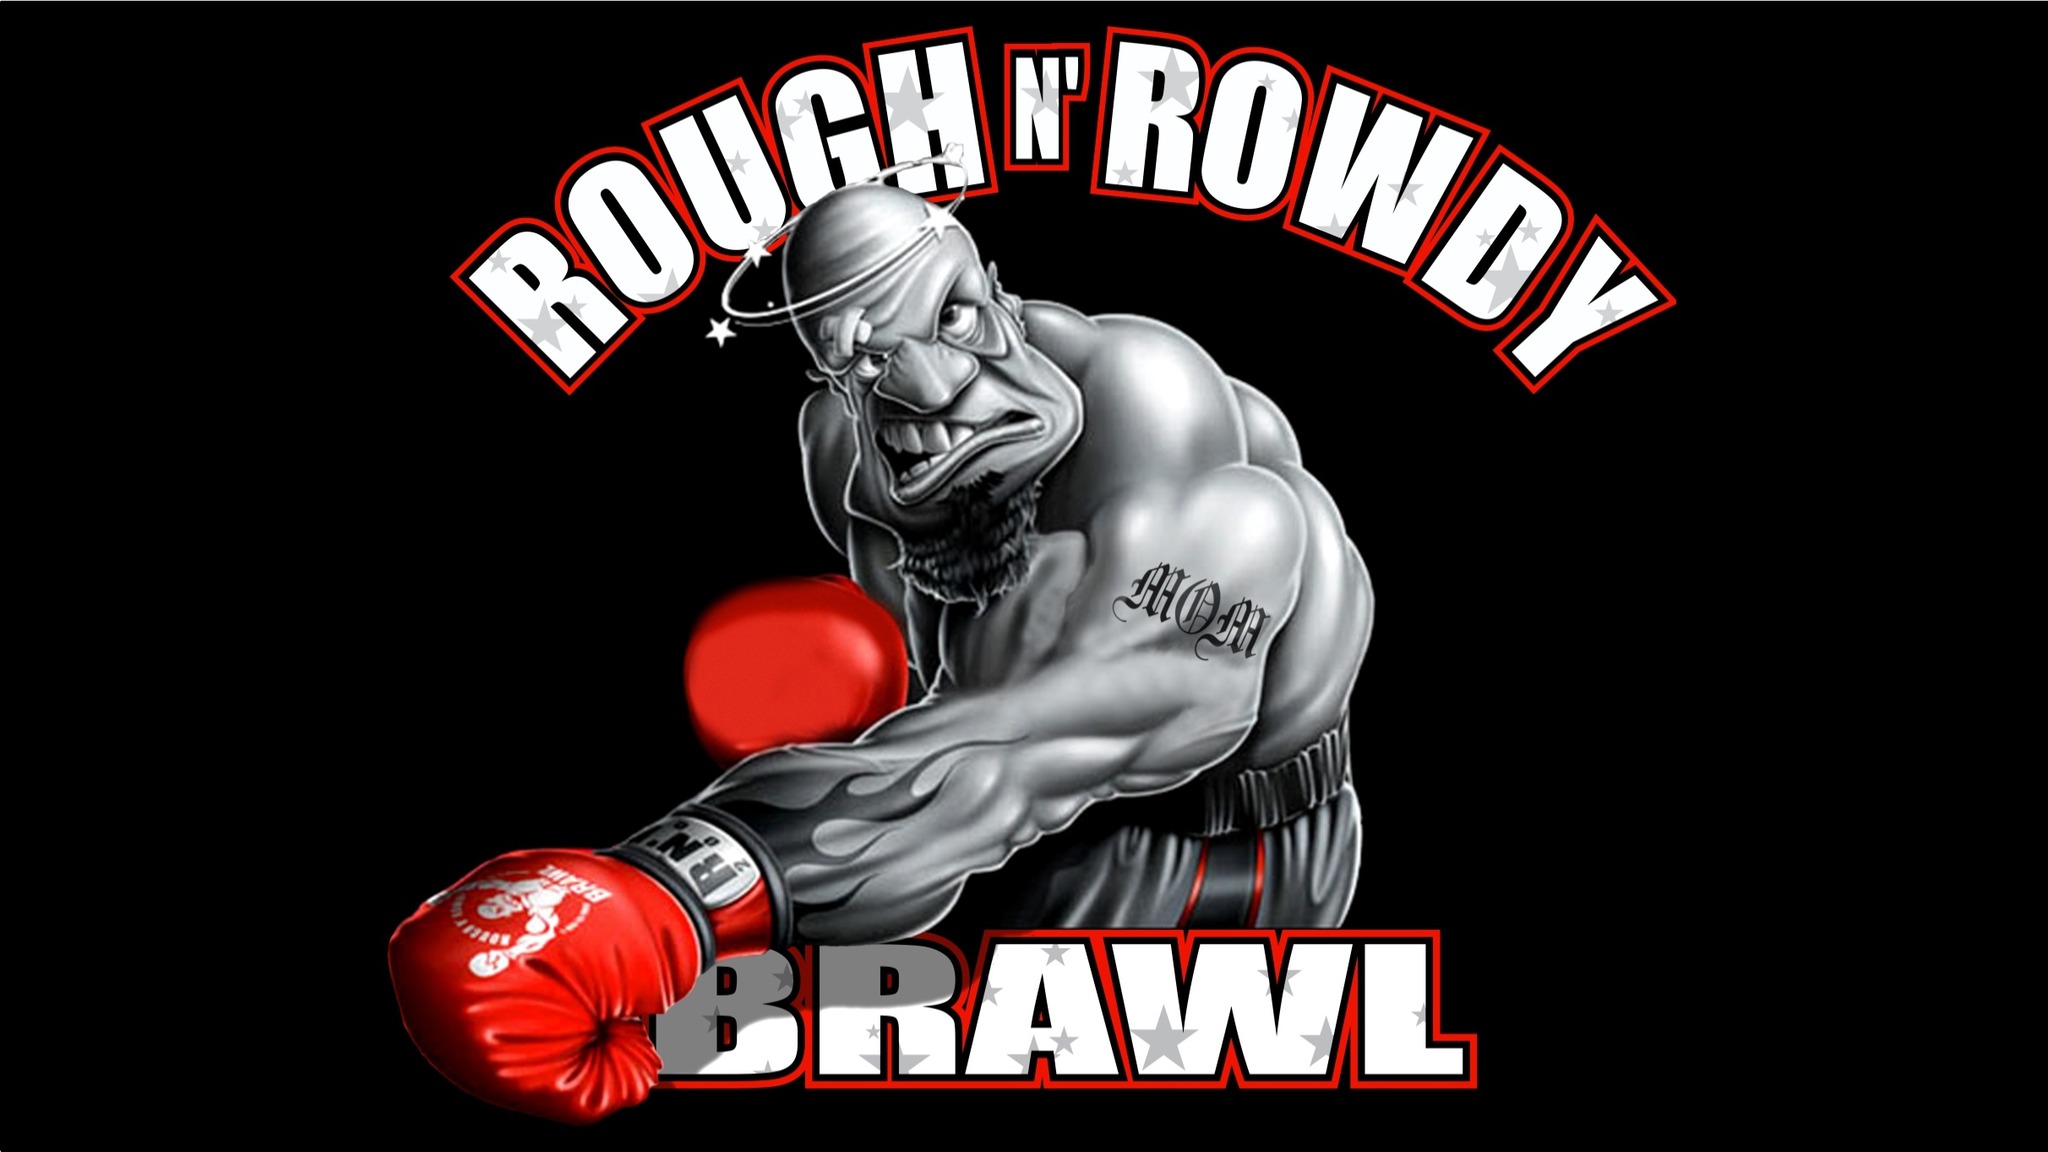 Rough N Rowdy Brawl Tickets Single Game Tickets & Schedule